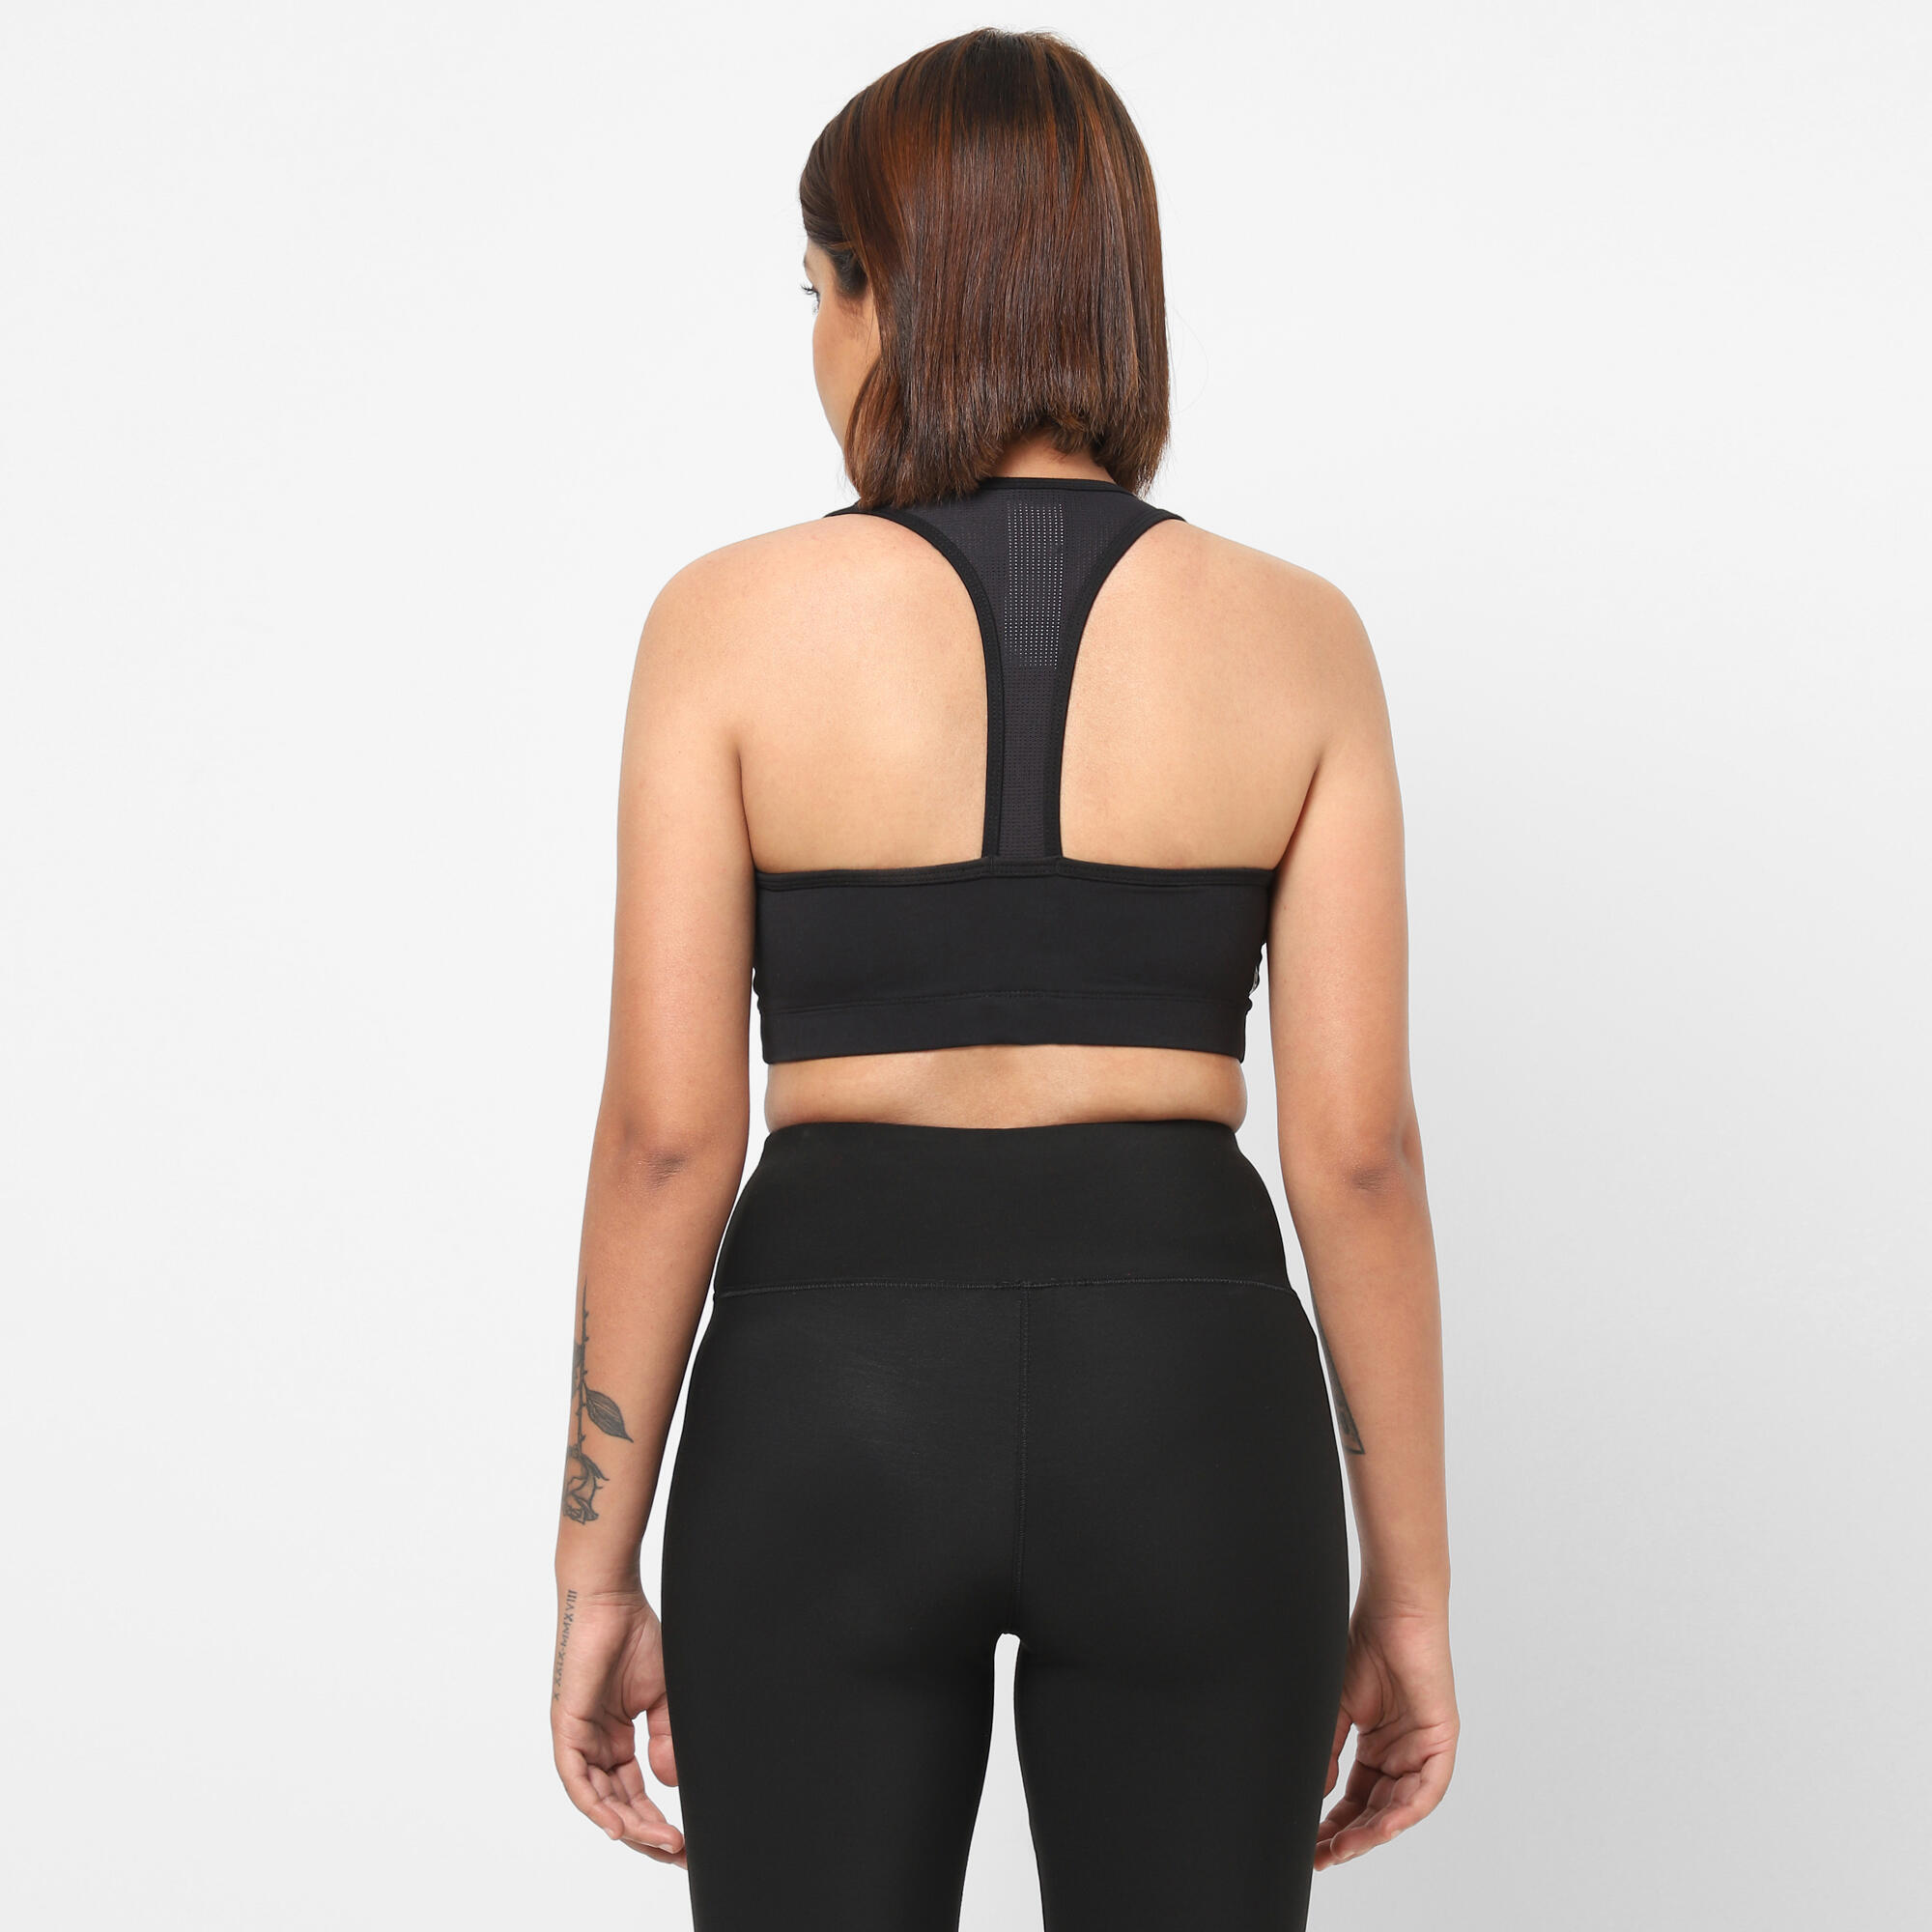 Buy 100 Women'S Zip-Up Fitness Cardio Training Sports Bra - Mottled Grey  Online